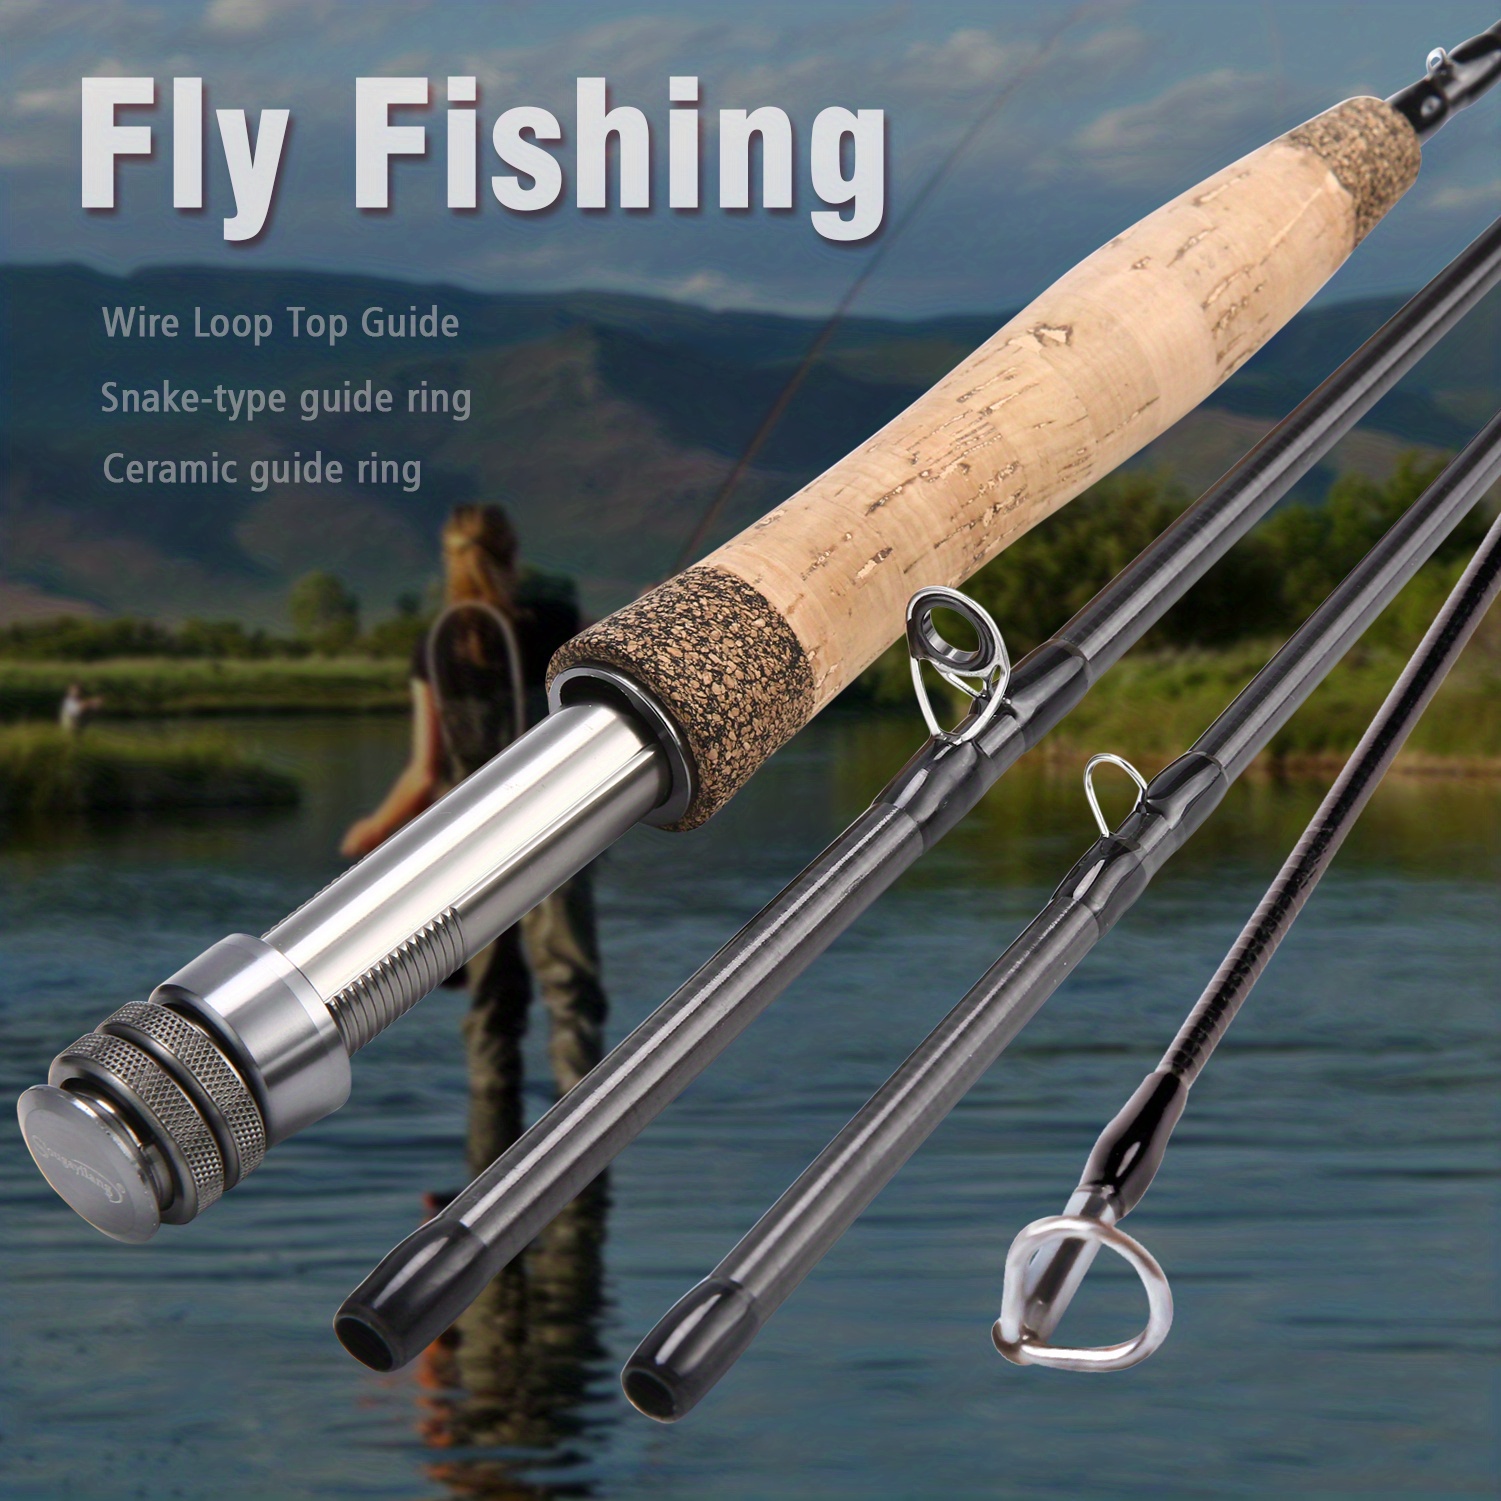 Sougayilang 5/6wt Fly Fishing Rod Lightweight Ultra portable - Temu